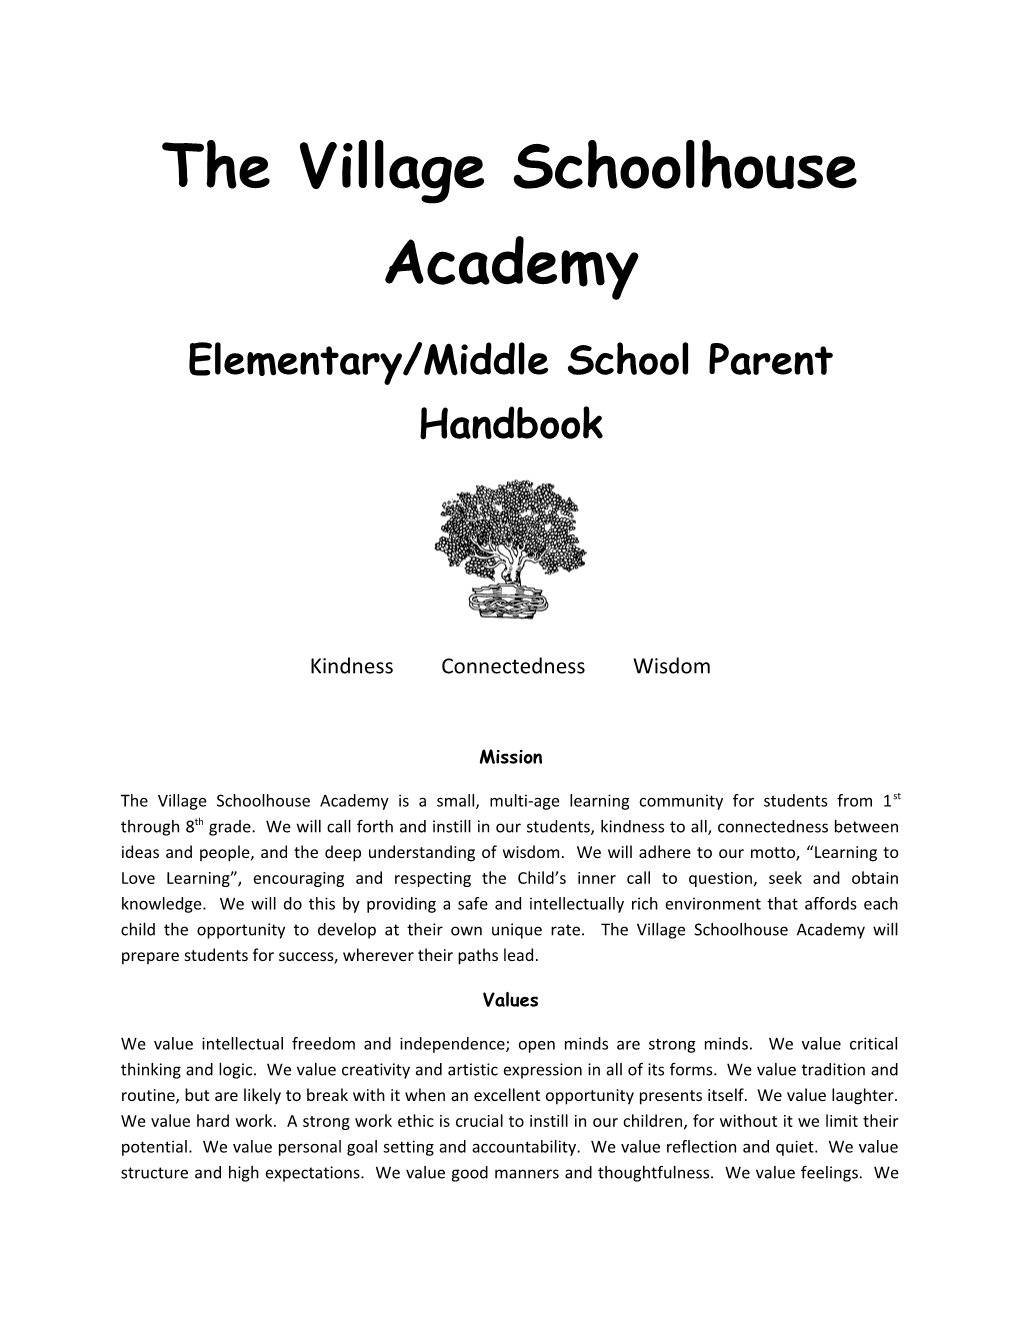 The Village Schoolhouse Academy